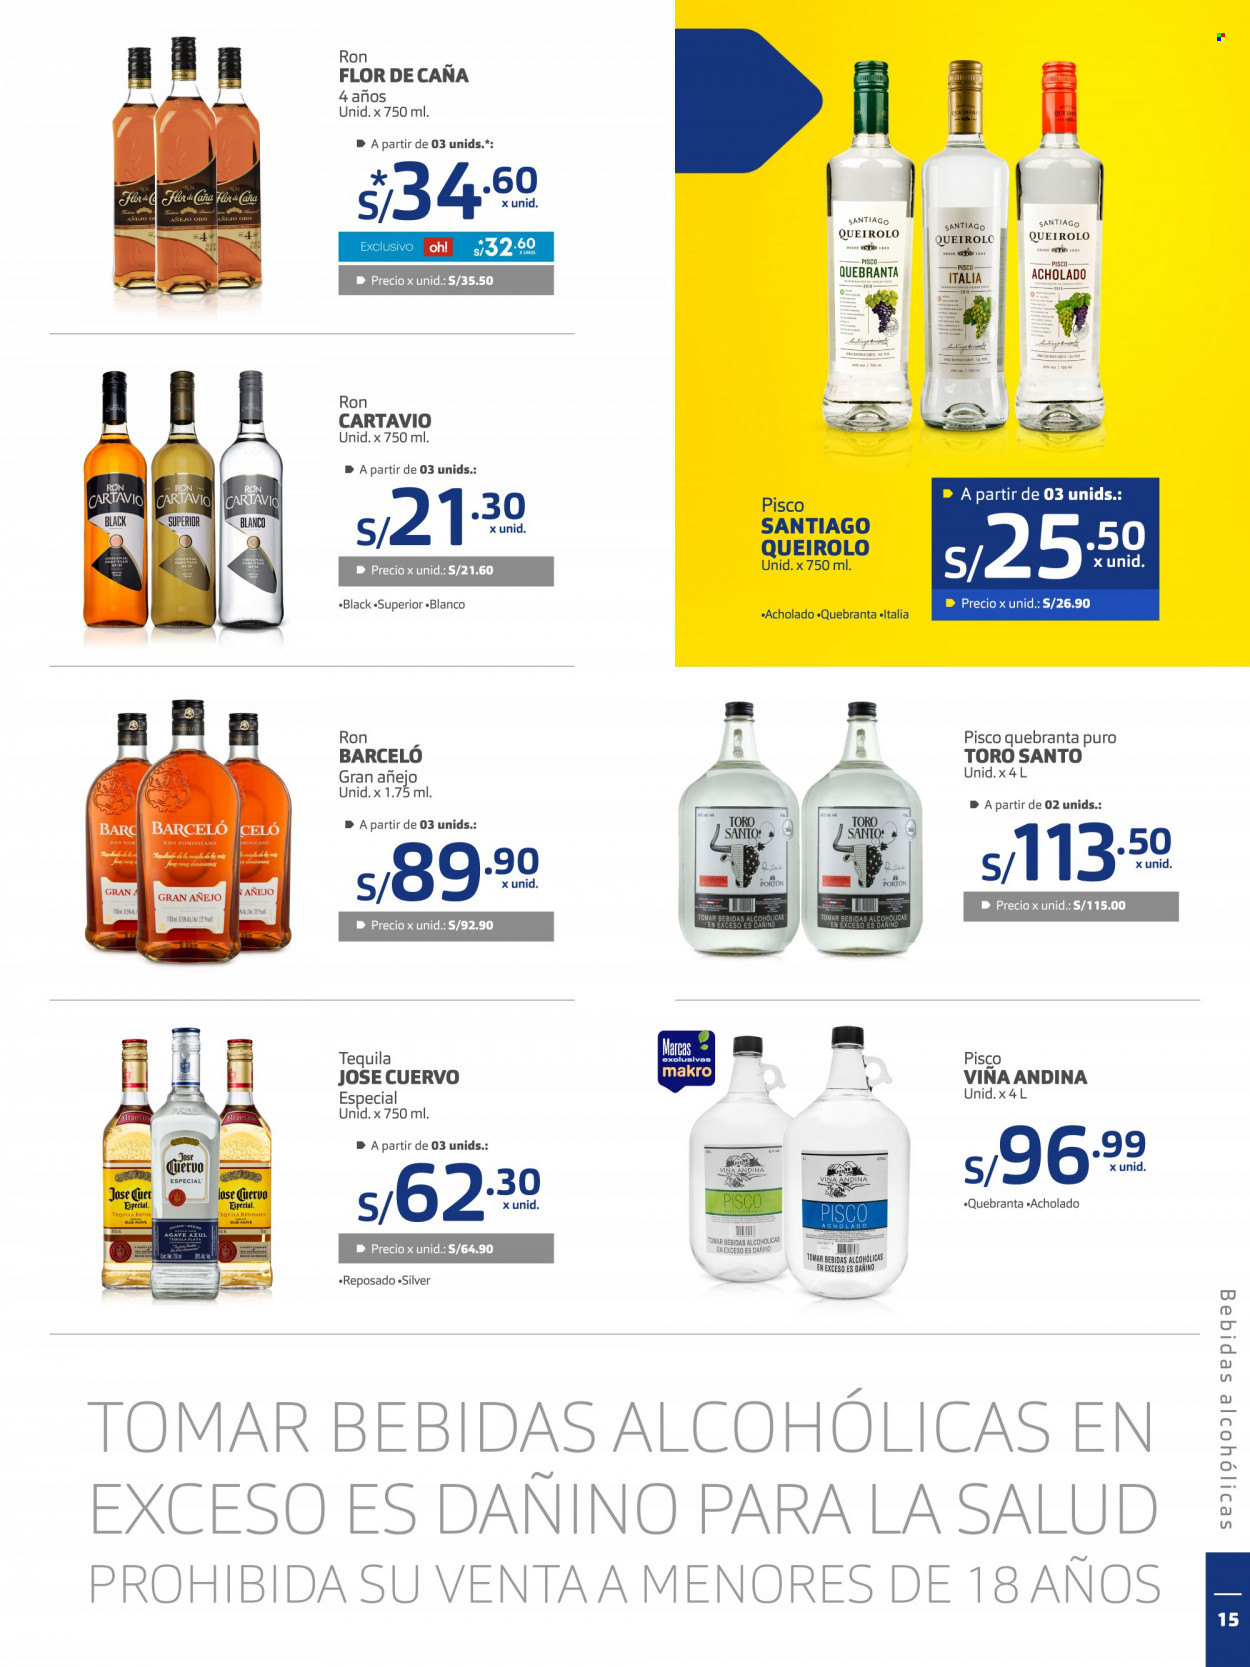 thumbnail - Folleto actual Makro - 26.1.2023 - 8.2.2023 - Ventas - bebida alcohólica, bebida, ron, Barceló, Flor de Caña, tequila, José Cuervo, pisco. Página 15.